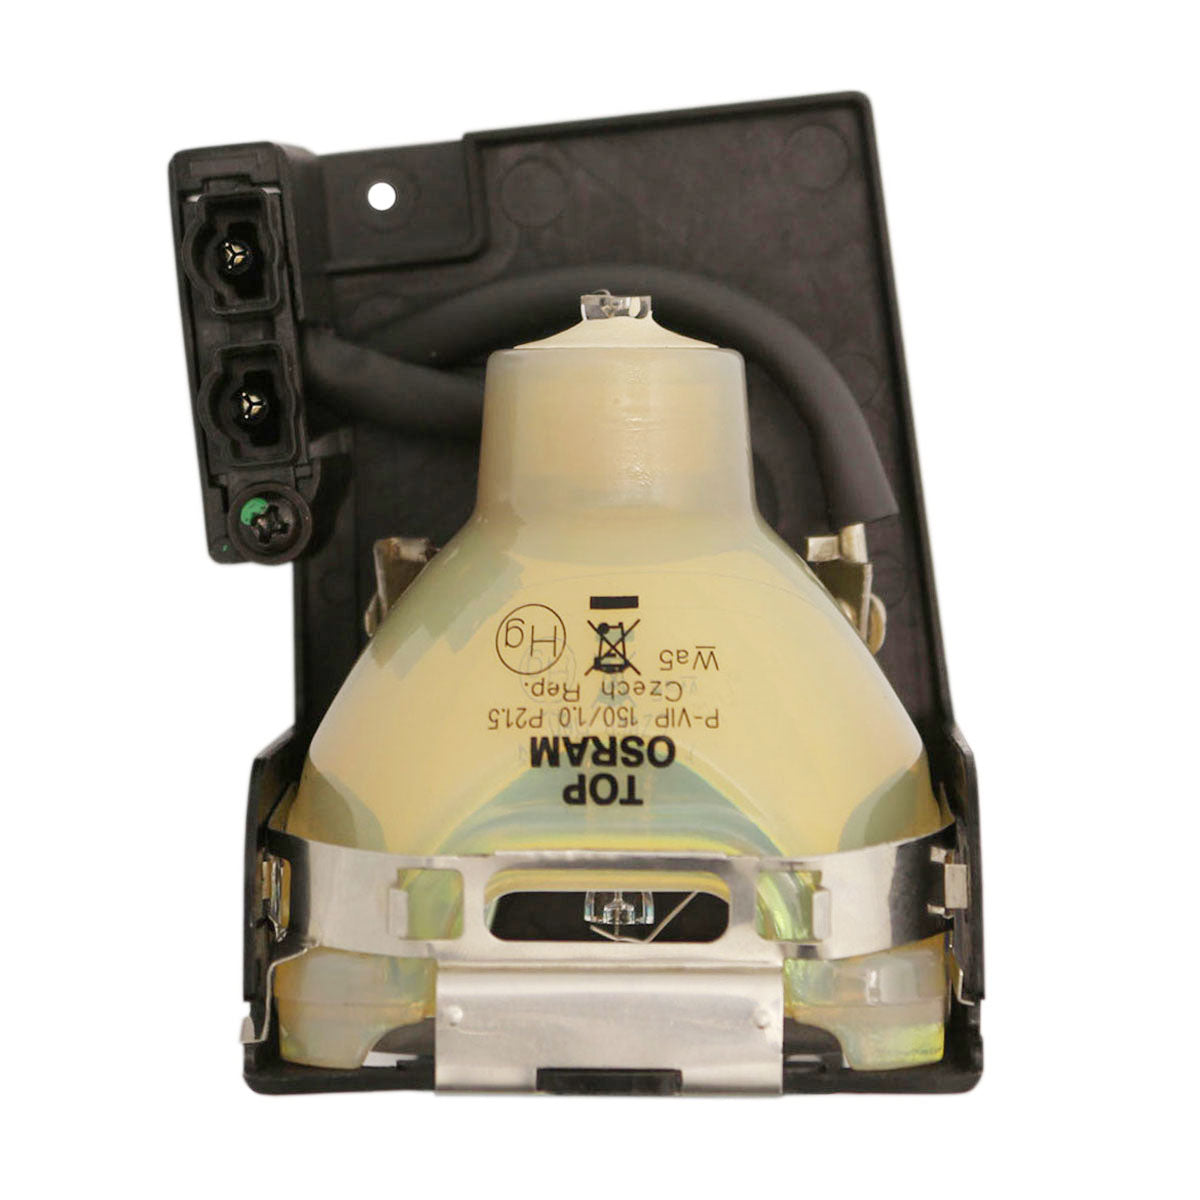 Canon LV-LP14 Osram Projector Lamp Module